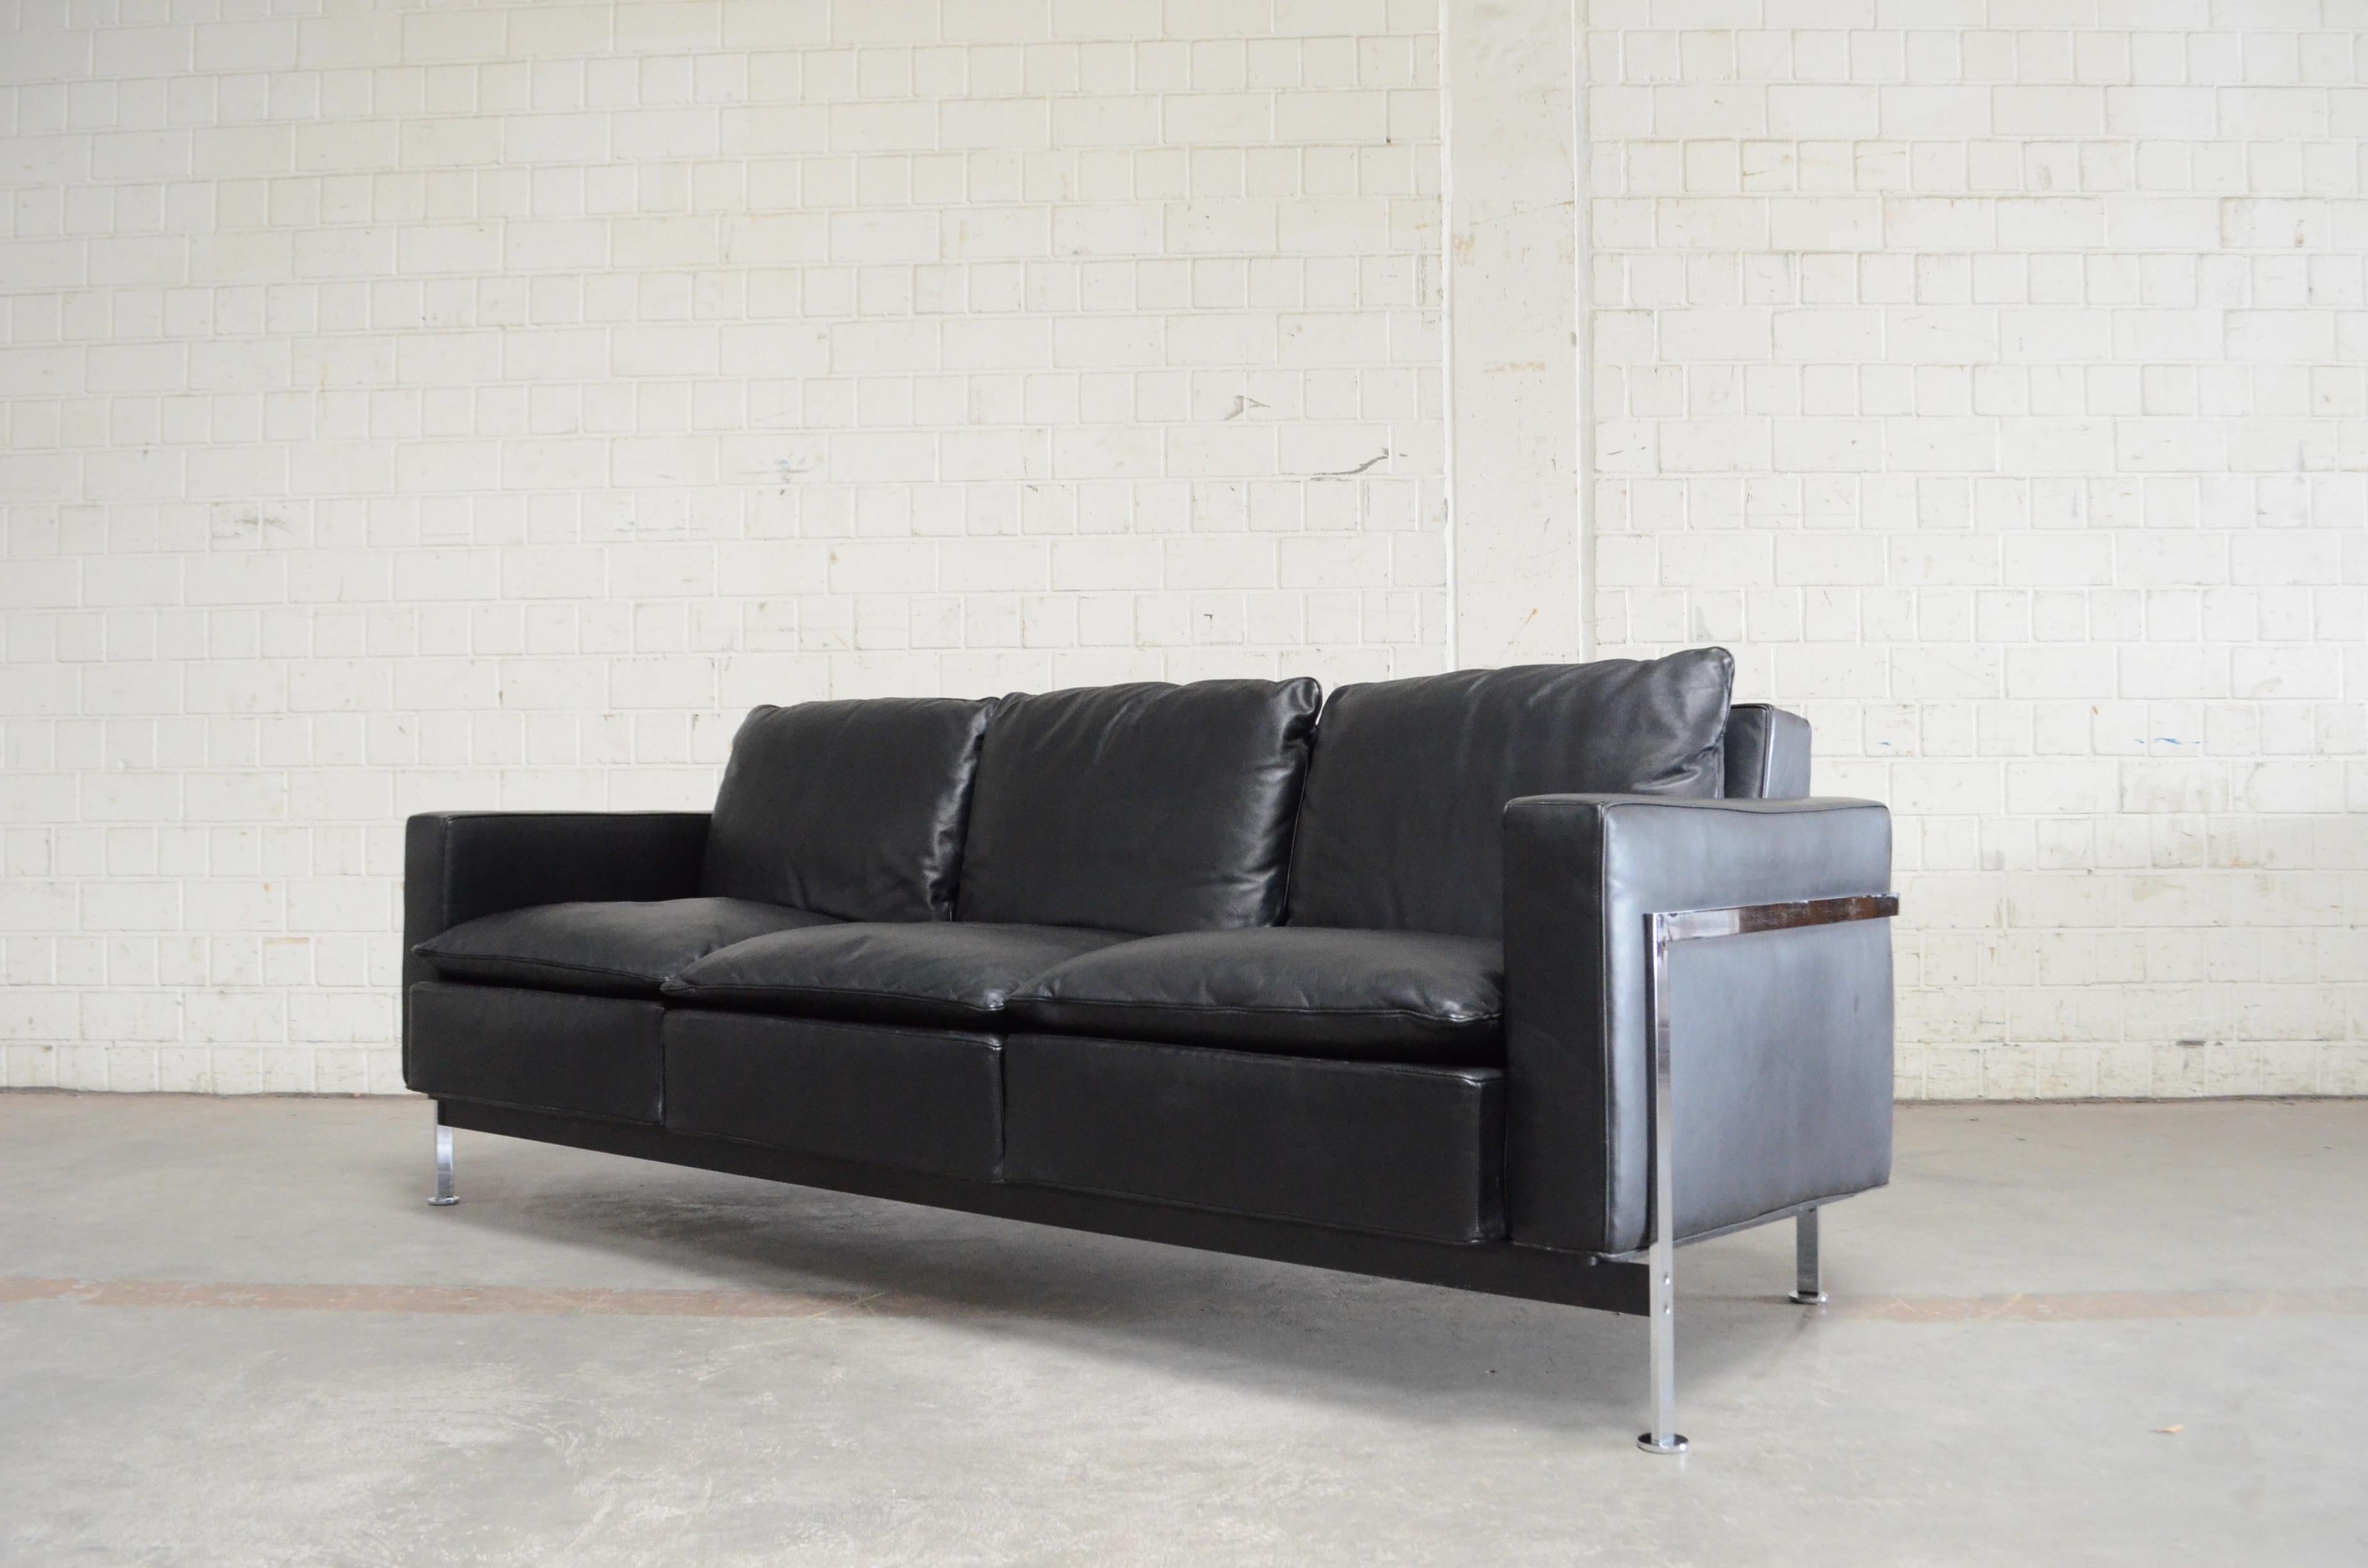 Robert Haussmann for Hans Kaufeld or De Sede RH 302 Leather Sofa First Edition For Sale 3